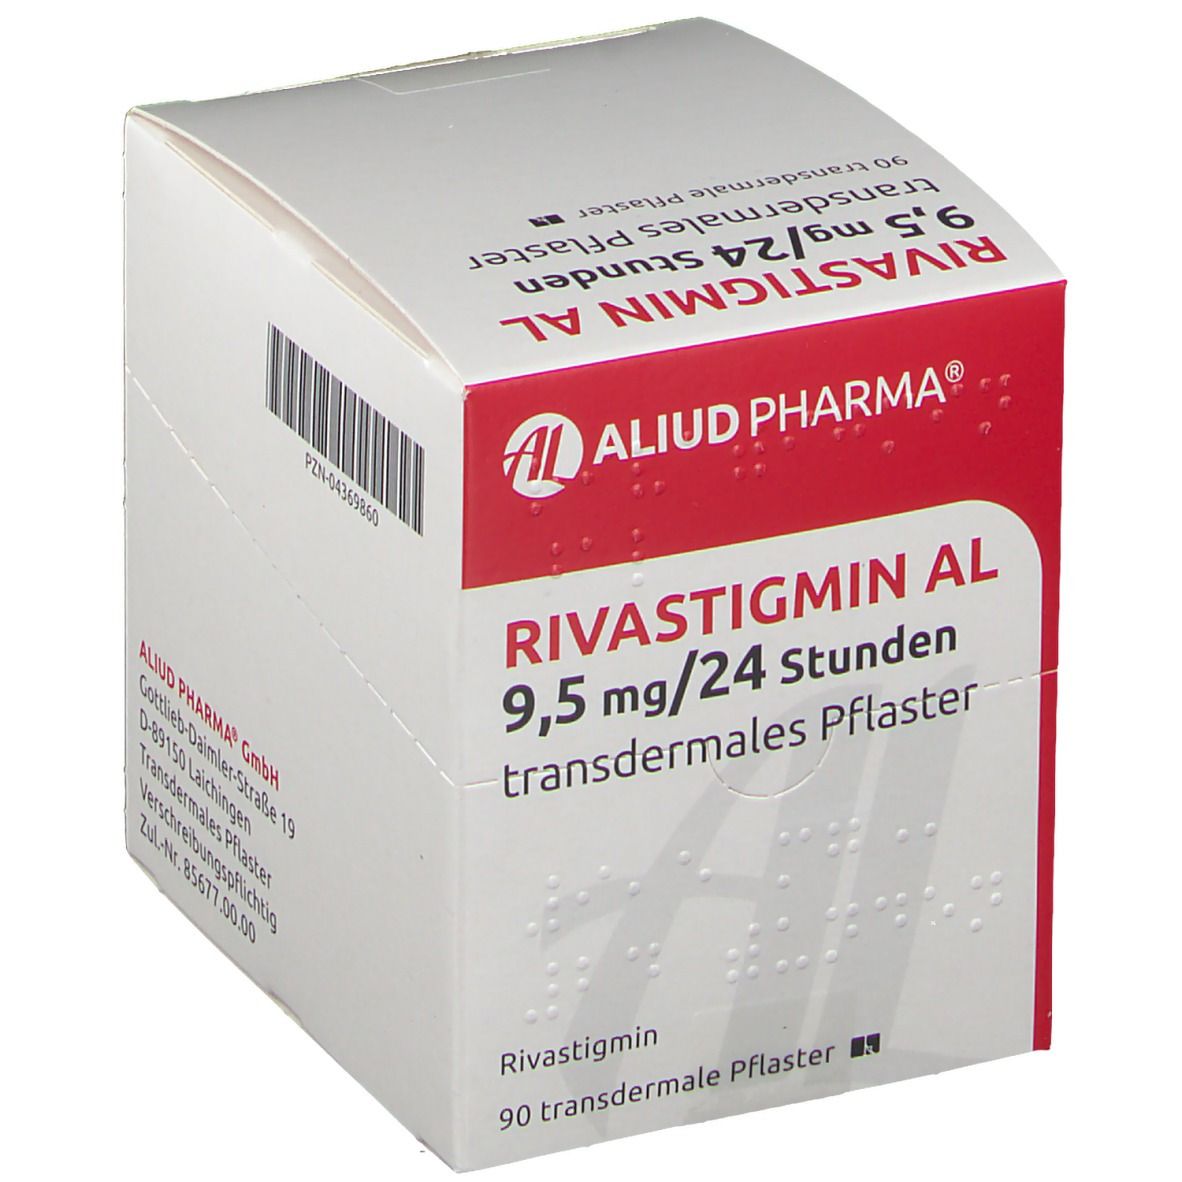 Rivastigmin AL 9,5 mg/24 Stunden